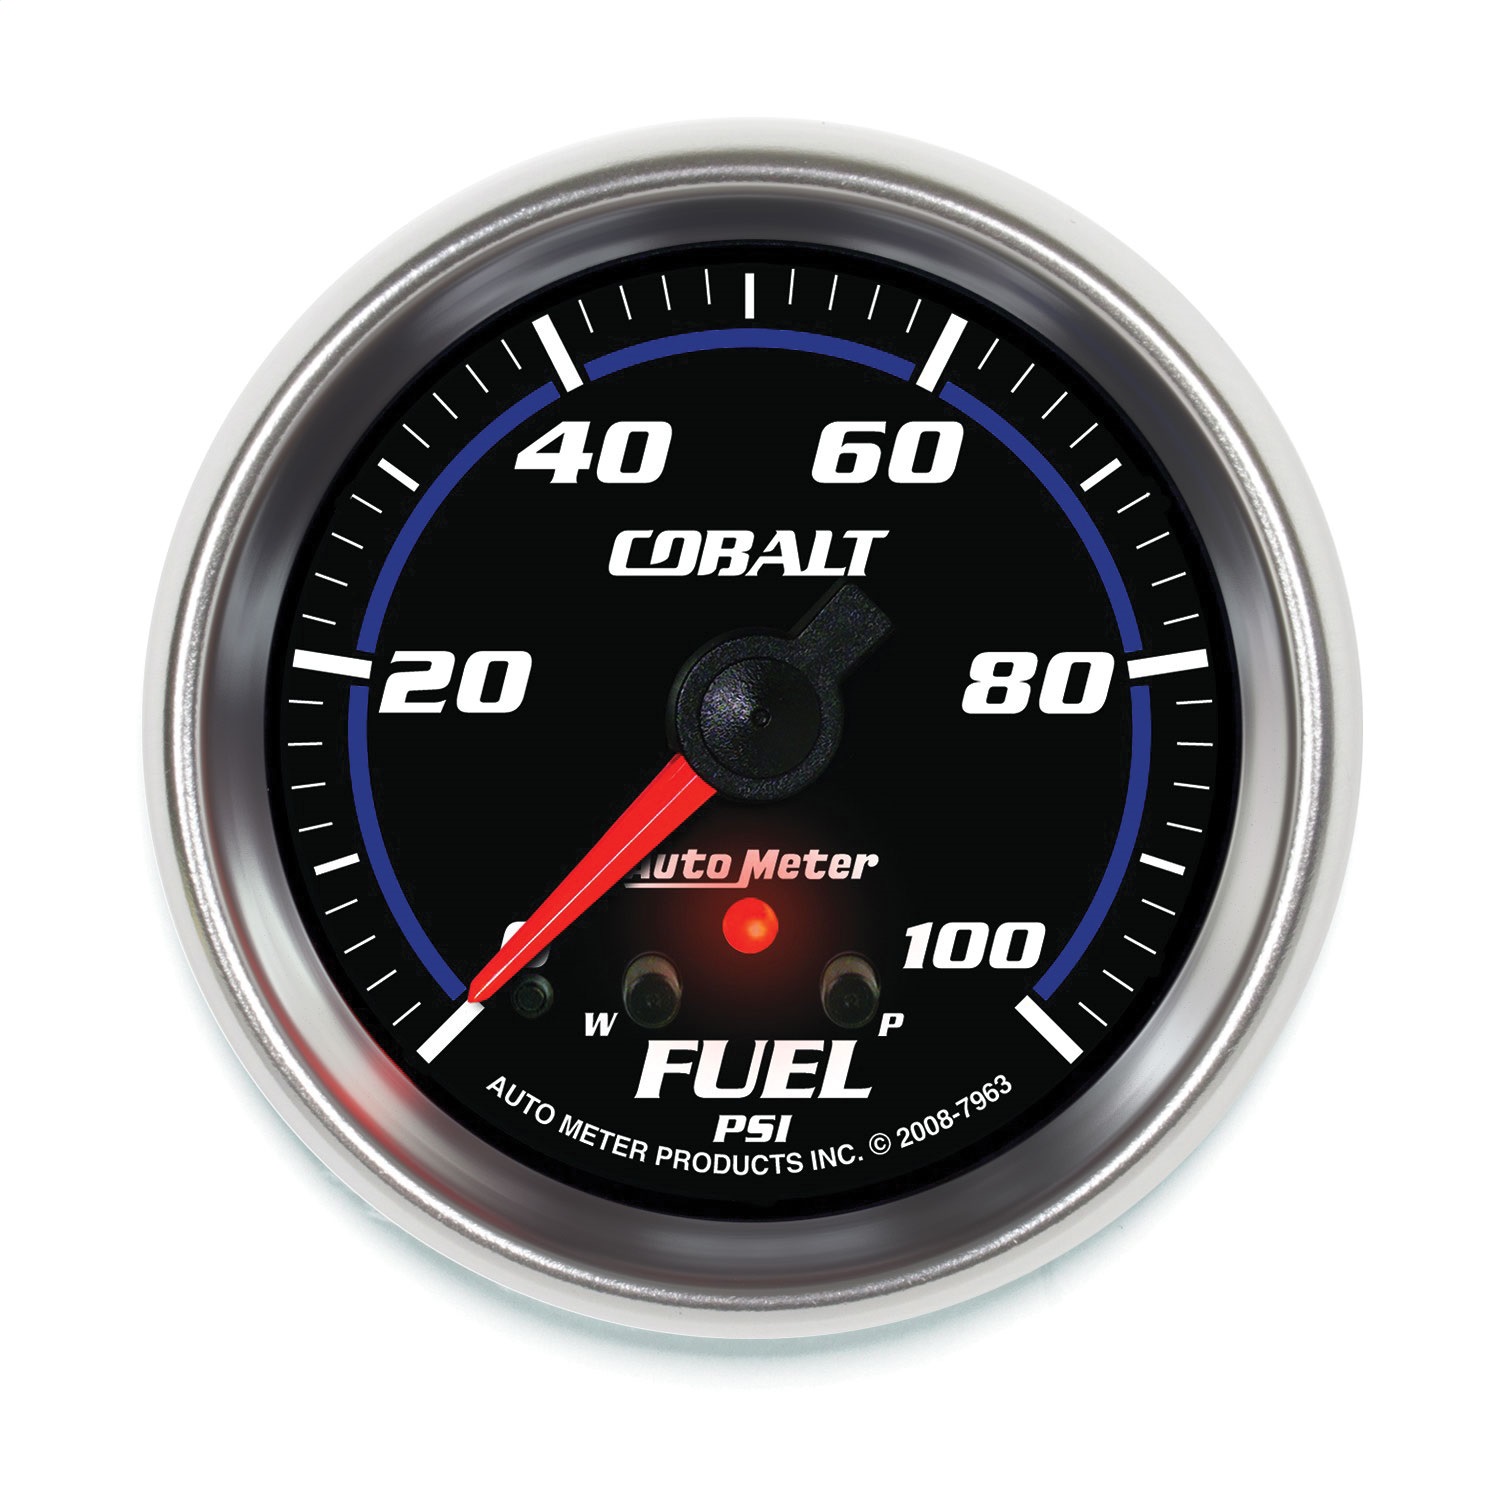 AutoMeter 7963 Cobalt Electric Fuel Pressure Gauge